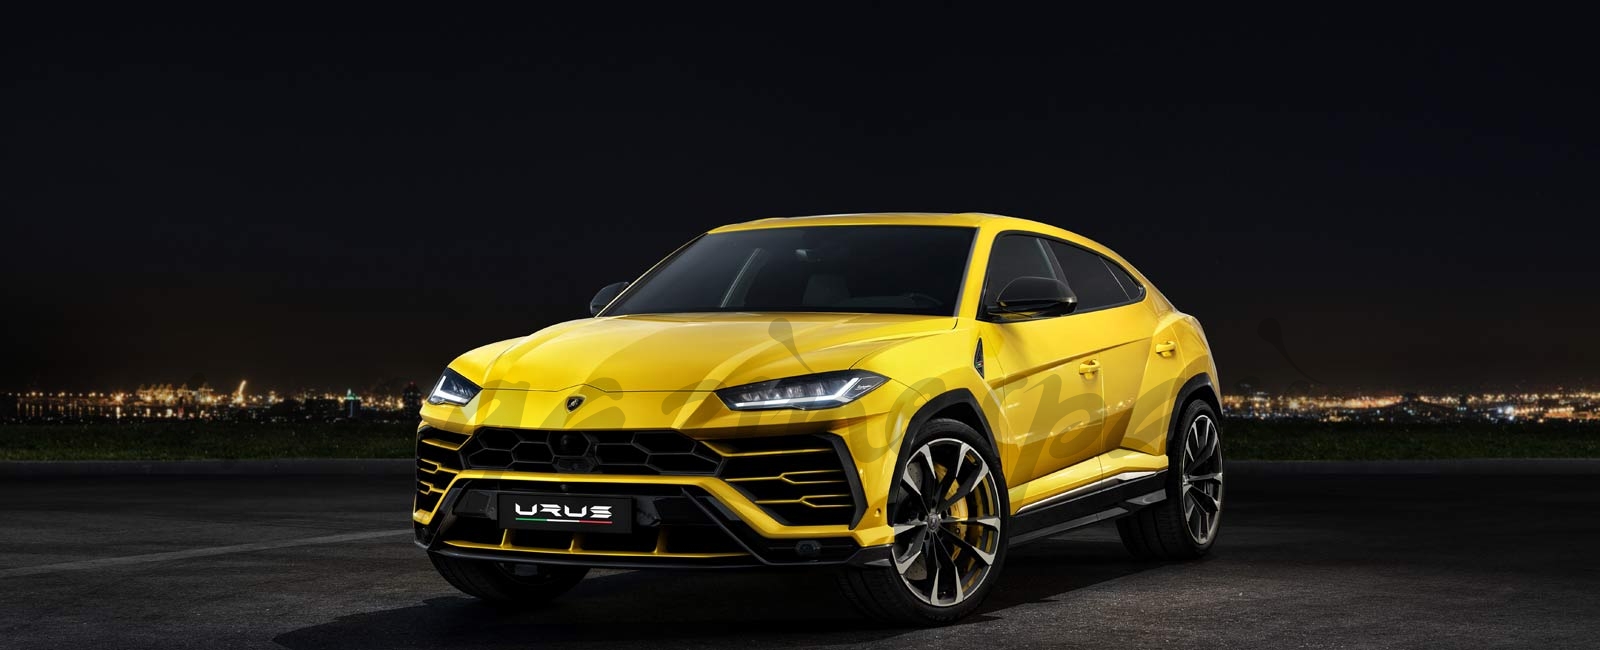 Nuevo Lamborghini URUS – Video